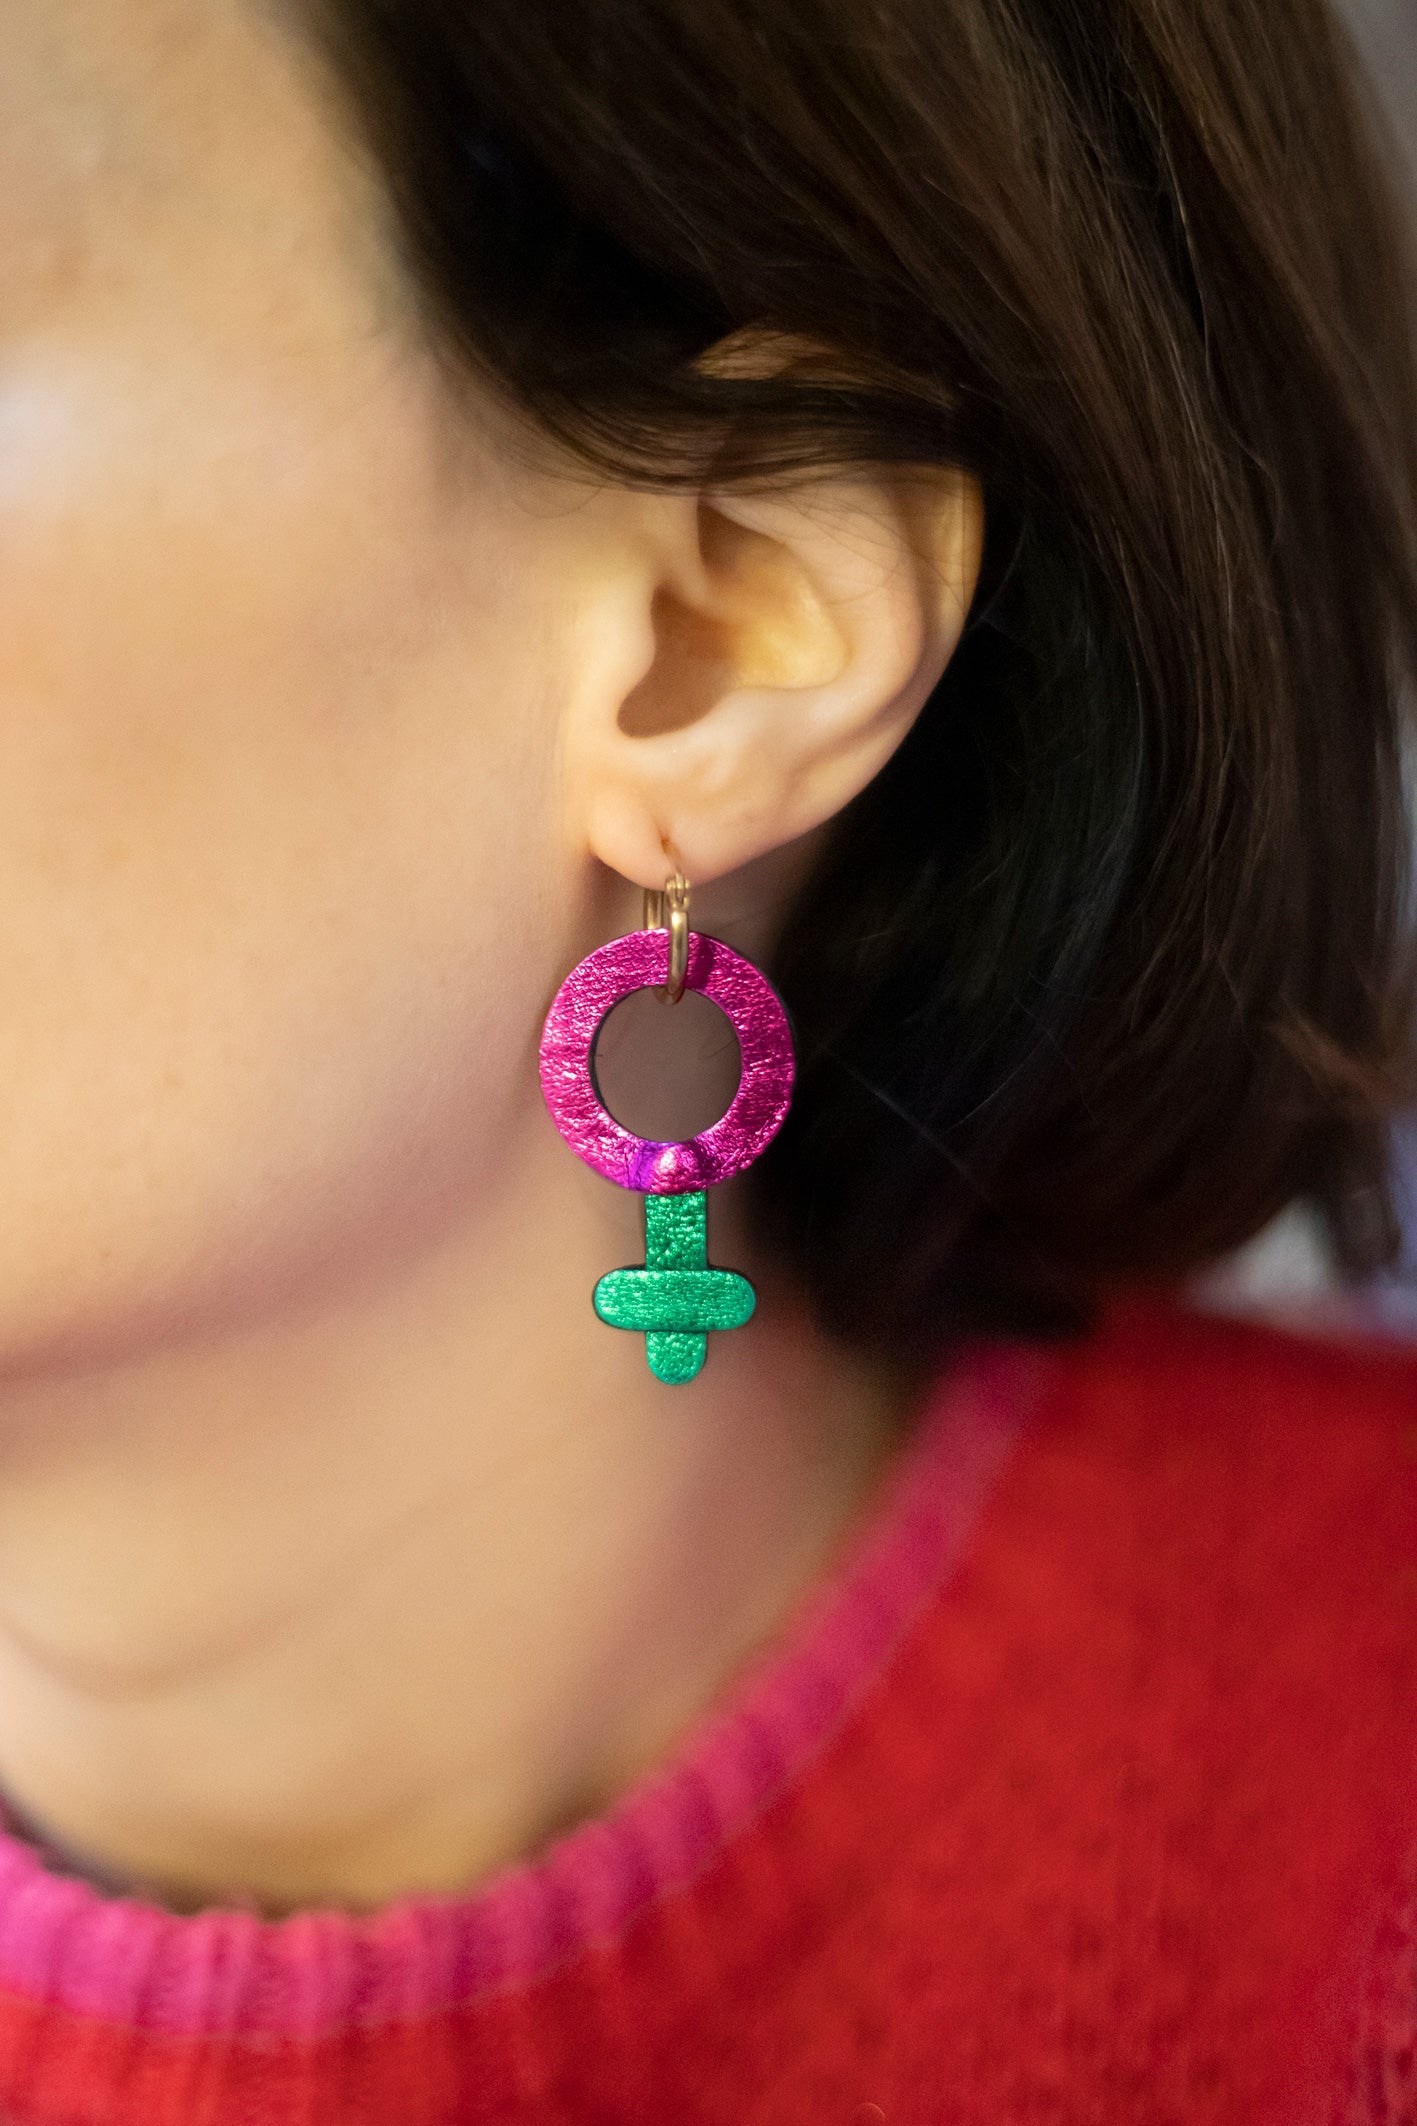 Pink and purple feminine symbol earrings